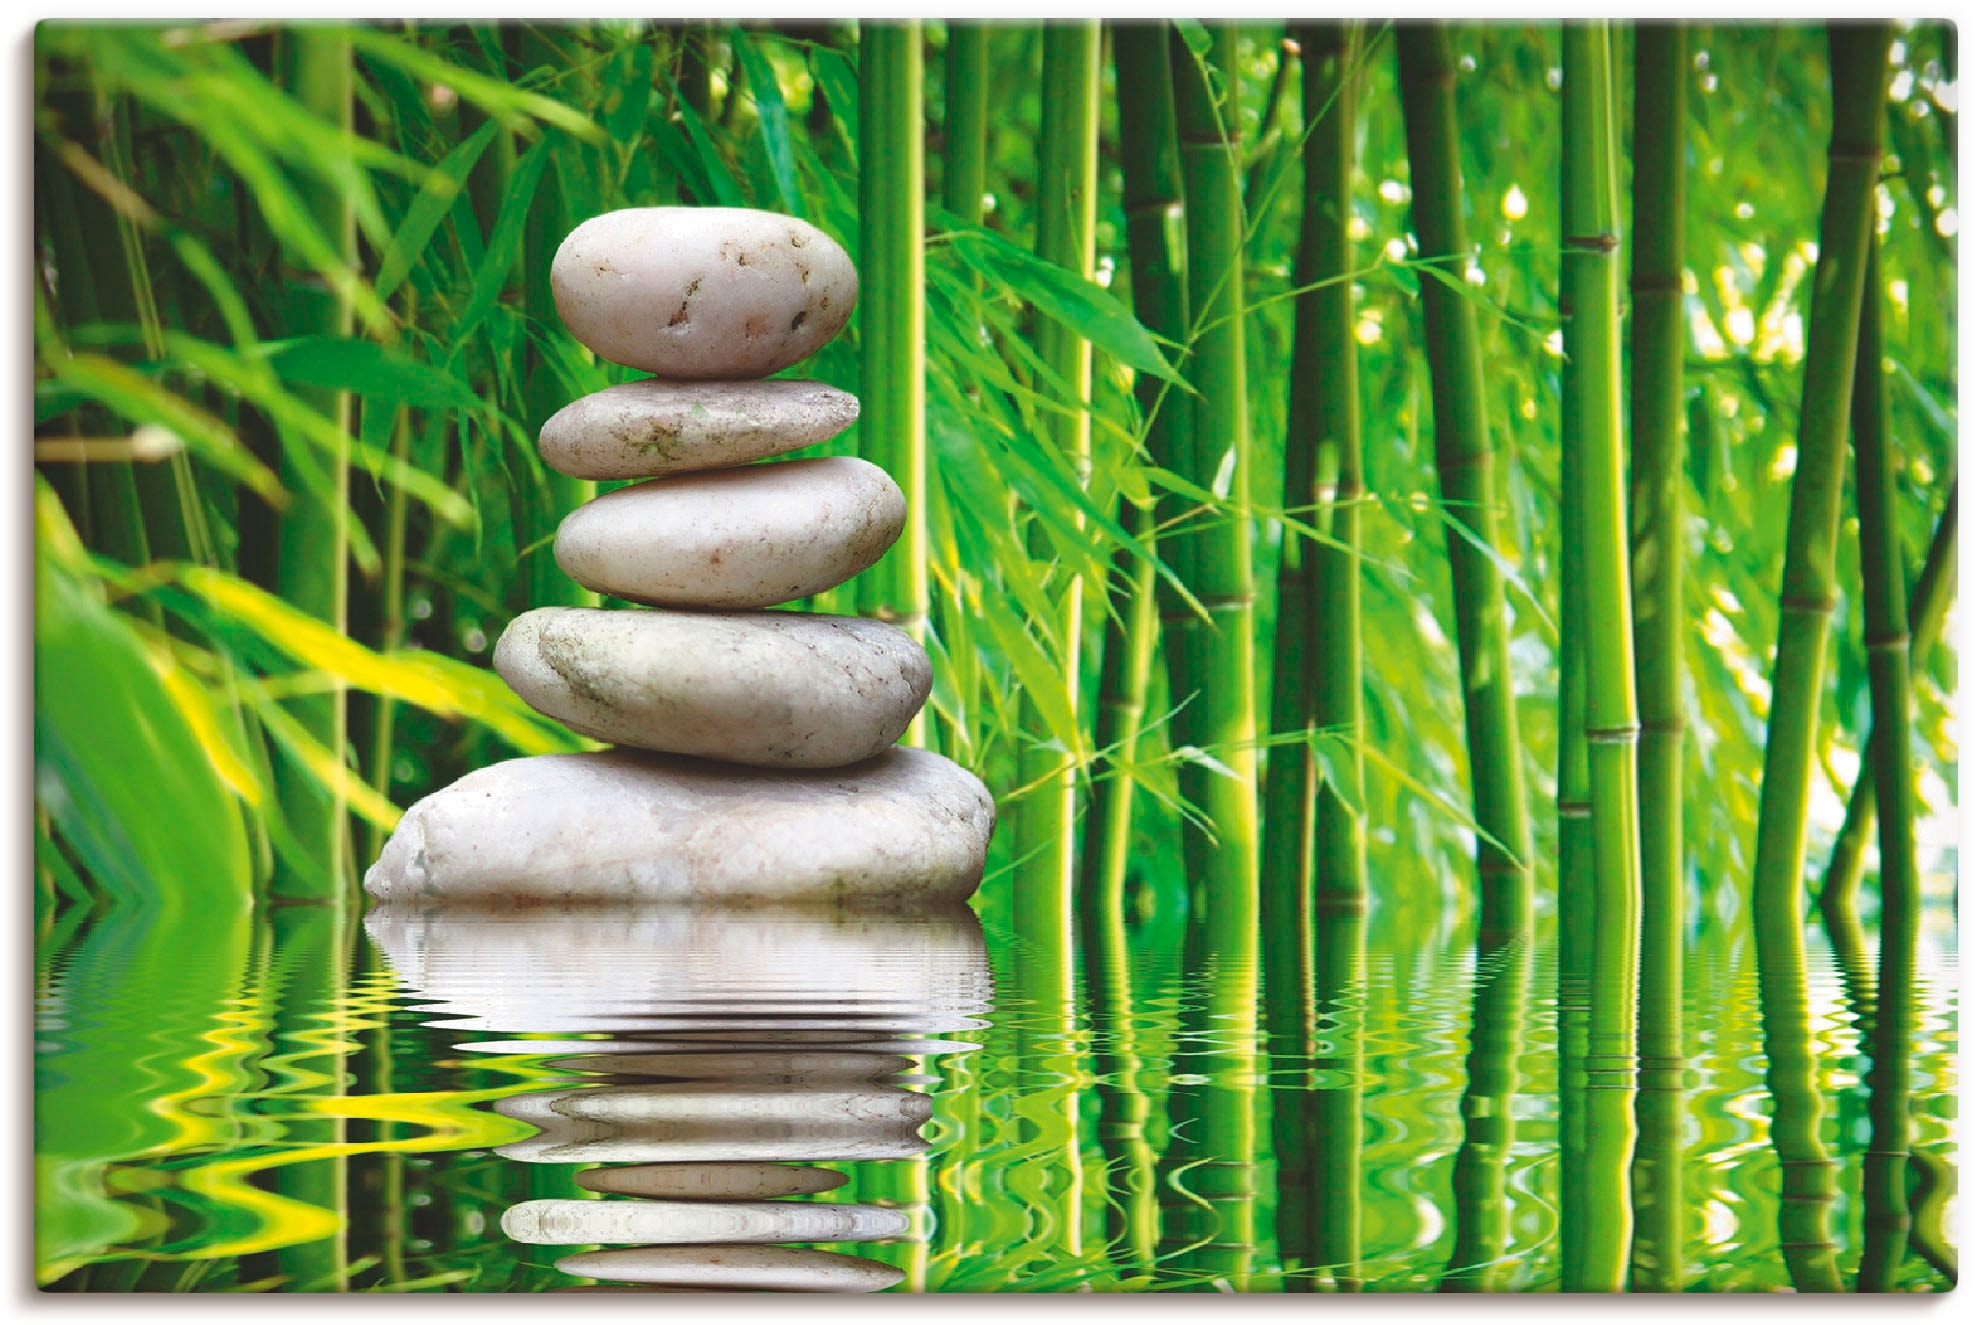 Artland Leinwandbild »Balance«, Zen, (1 St.), auf Keilrahmen gespannt